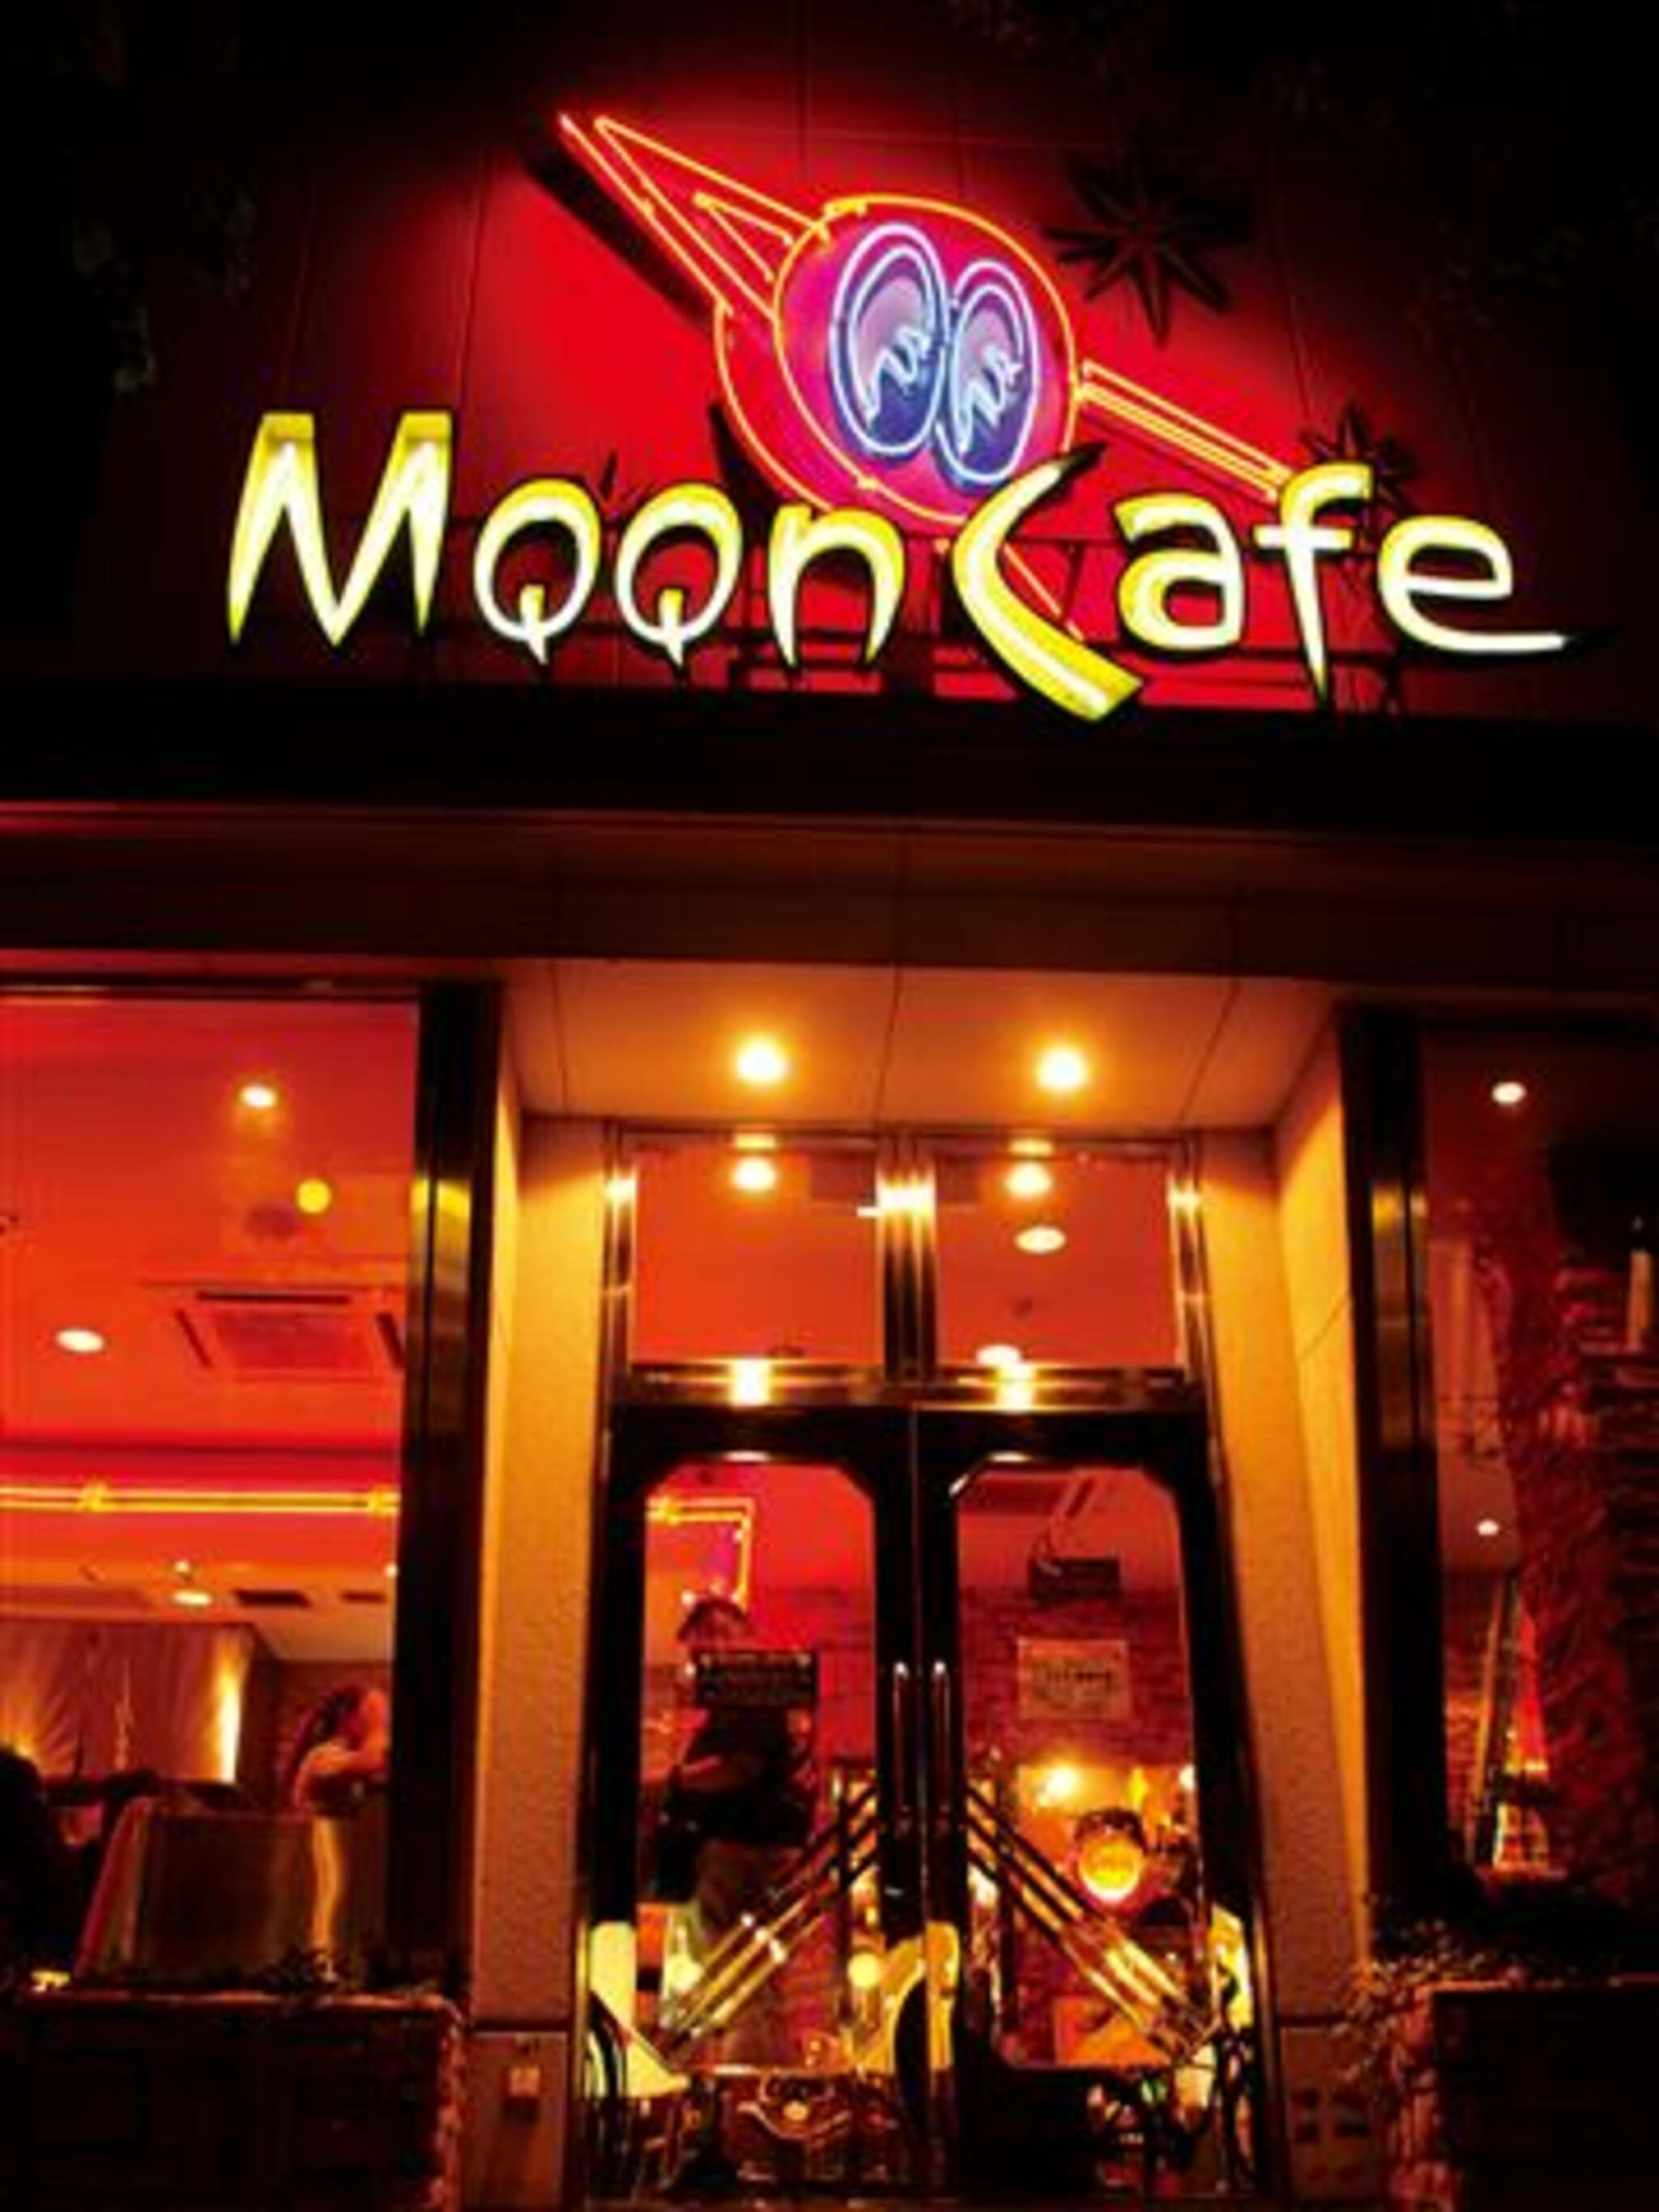 MOON Cafeの代表写真7